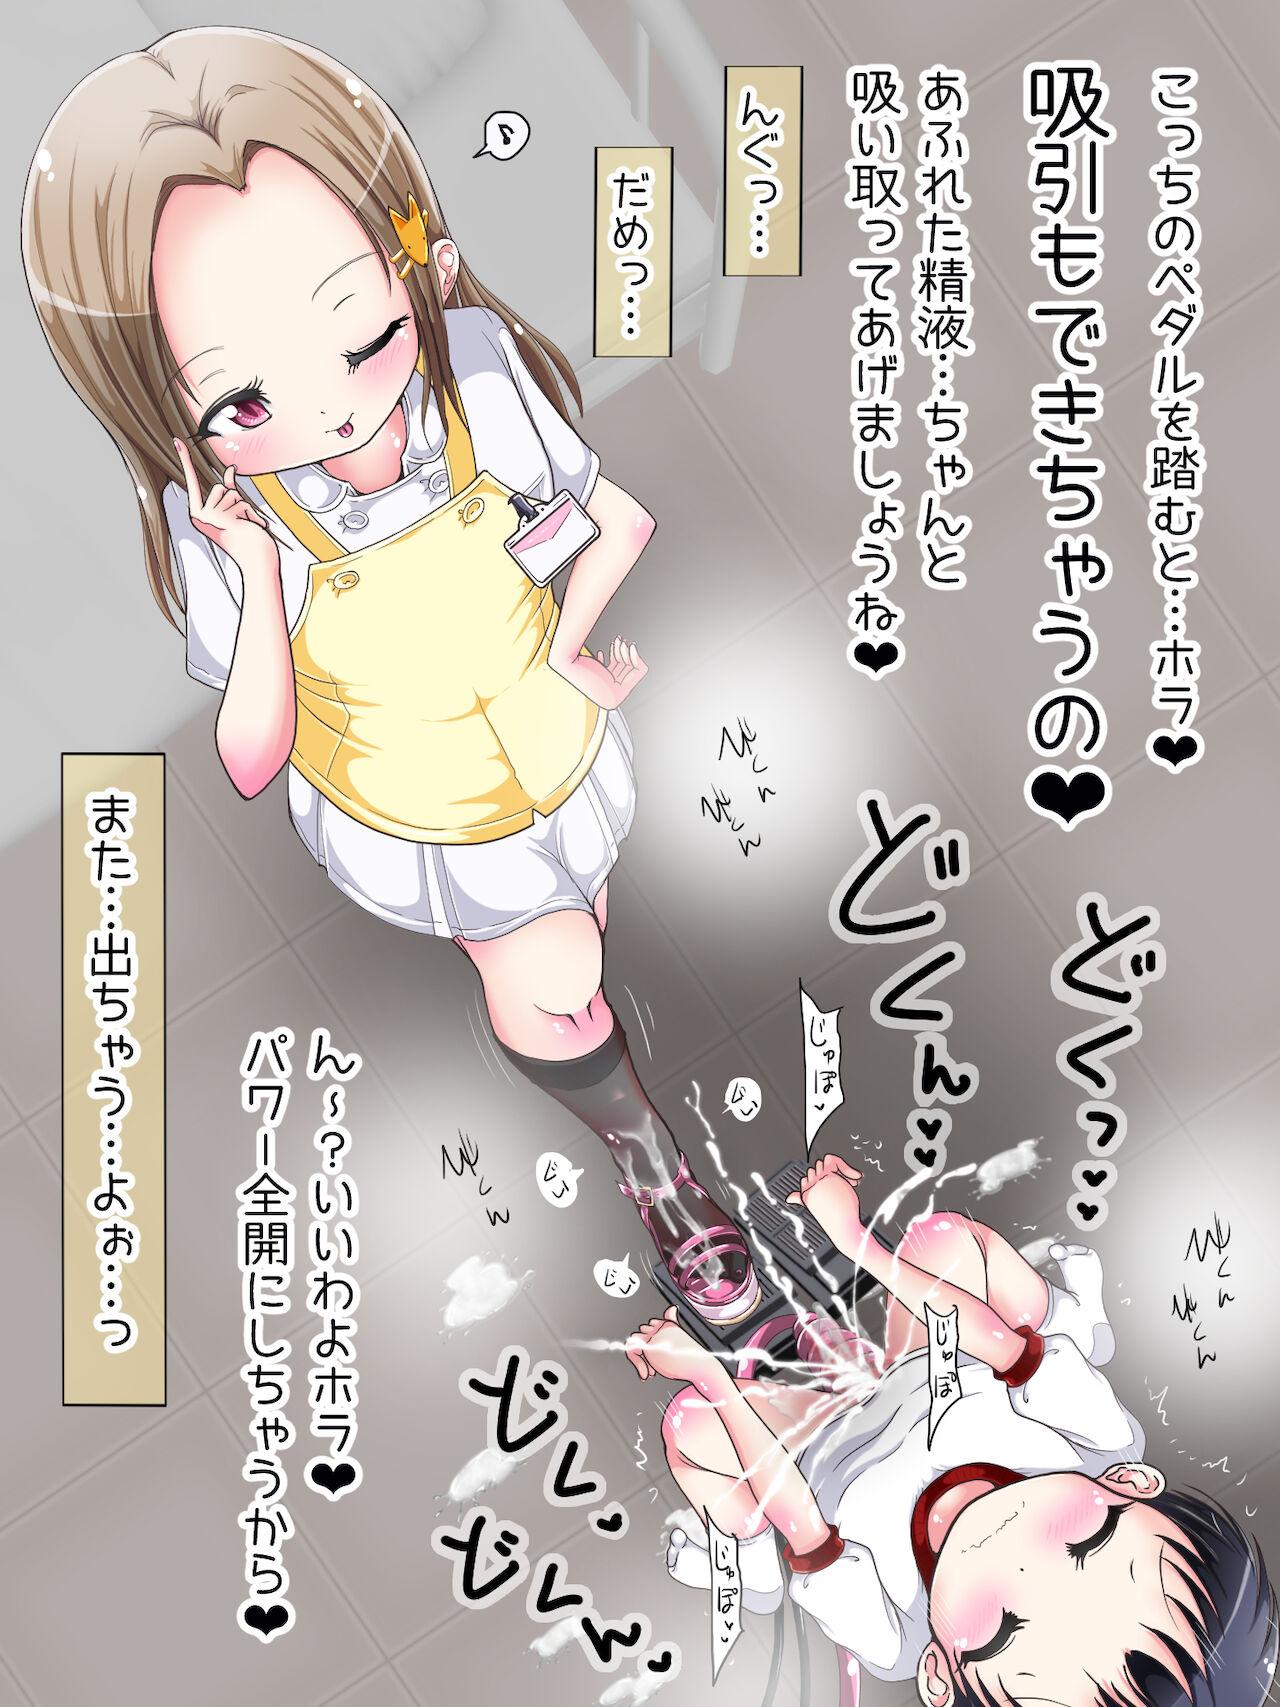 [Oneashi] One-Shota Footjob Lessons: Foot-Stroked by Nurses 348